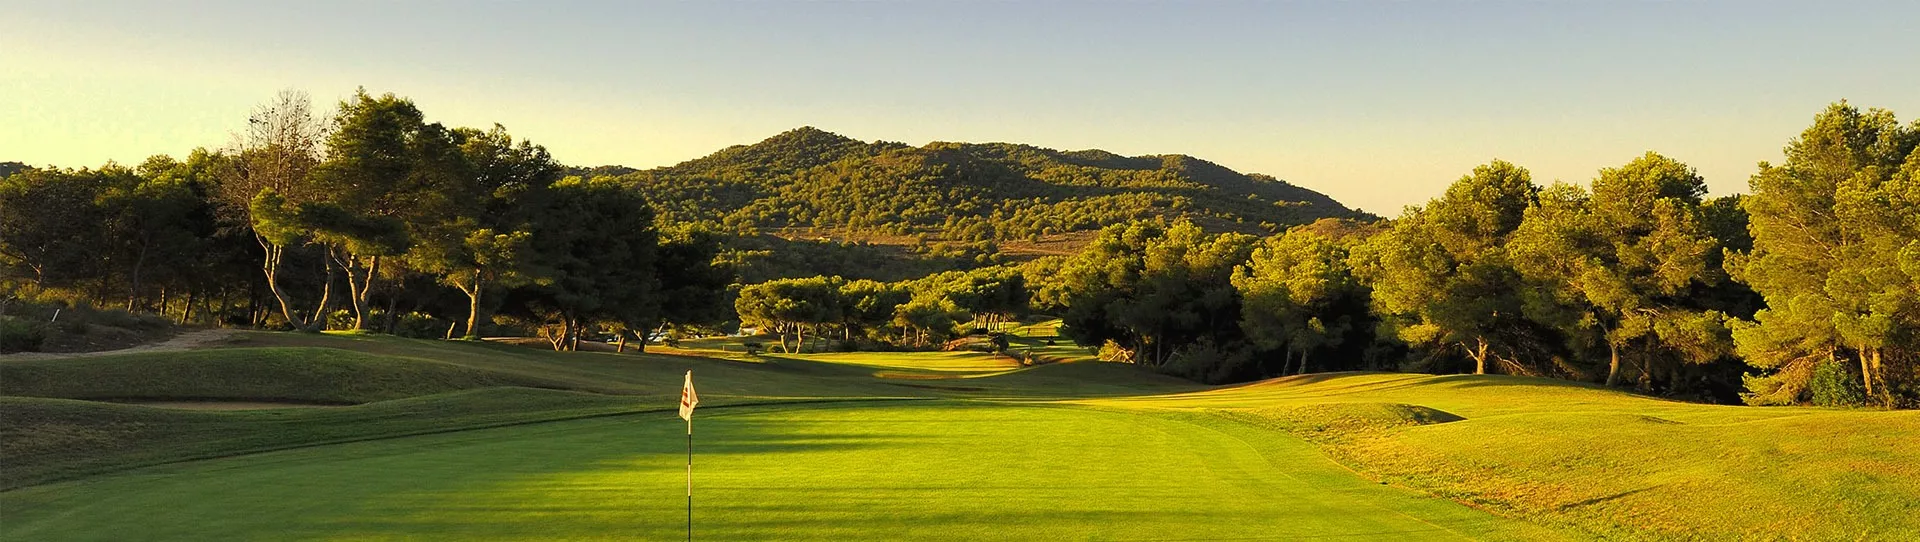 Spain golf courses - La Manga Club Resort West - Photo 2